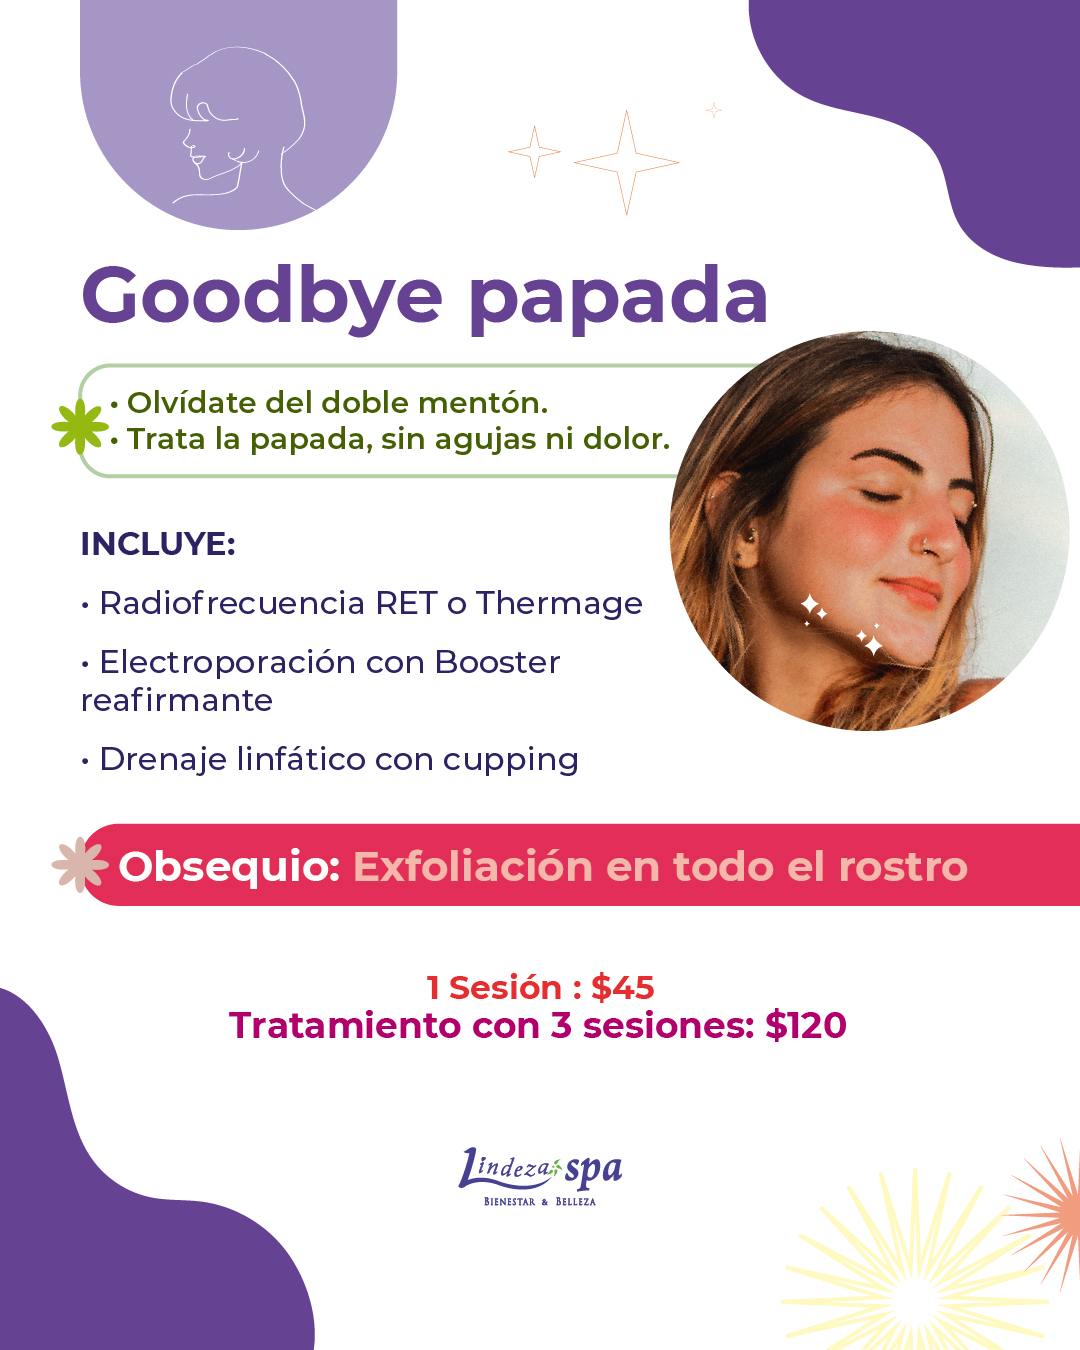 Goodbye papada, thermage, lifting, doble mentón, spa Guayaquil